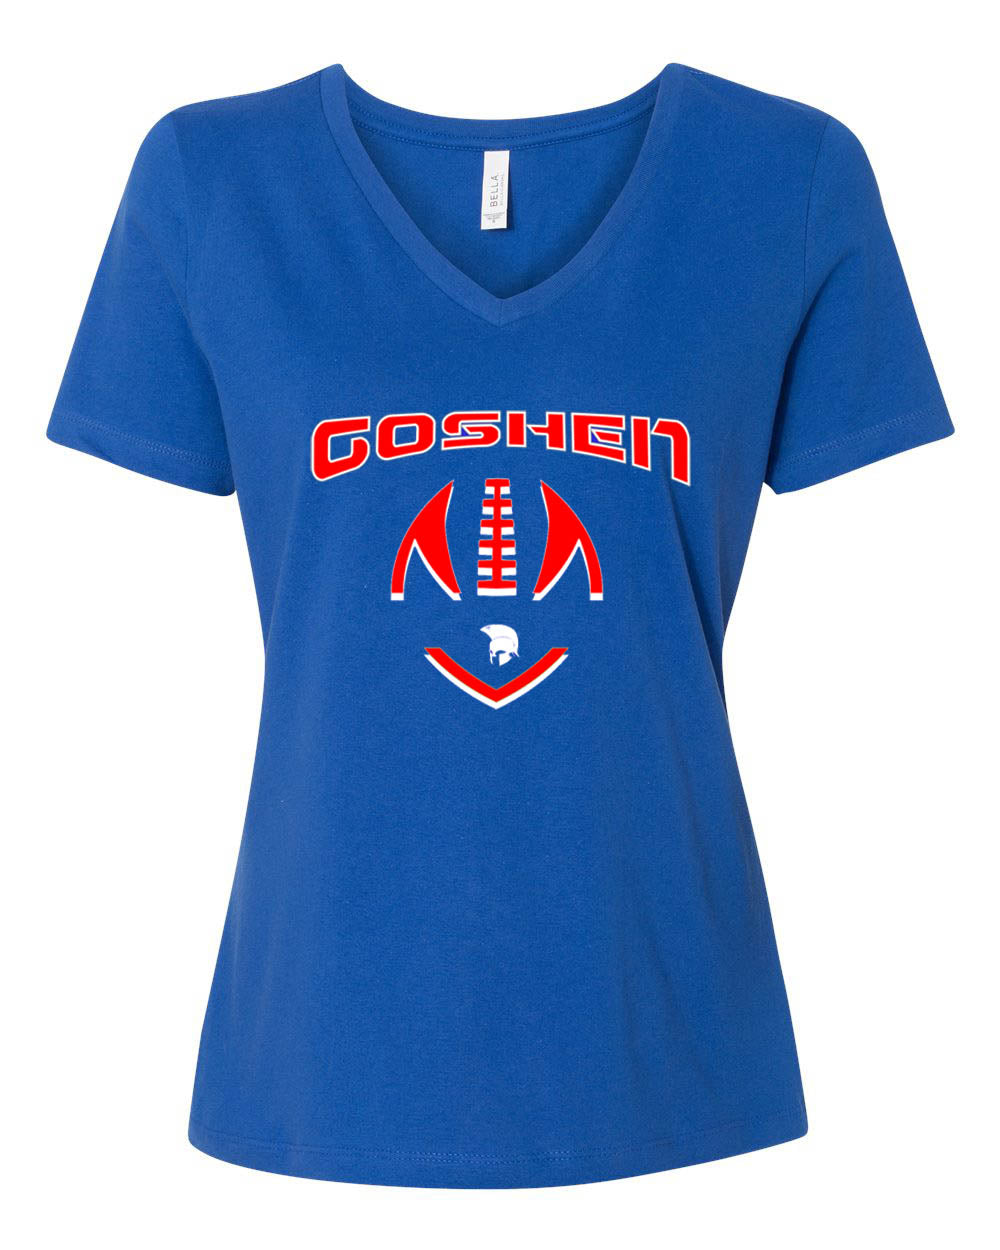 Goshen Football V-neck T-Shirt